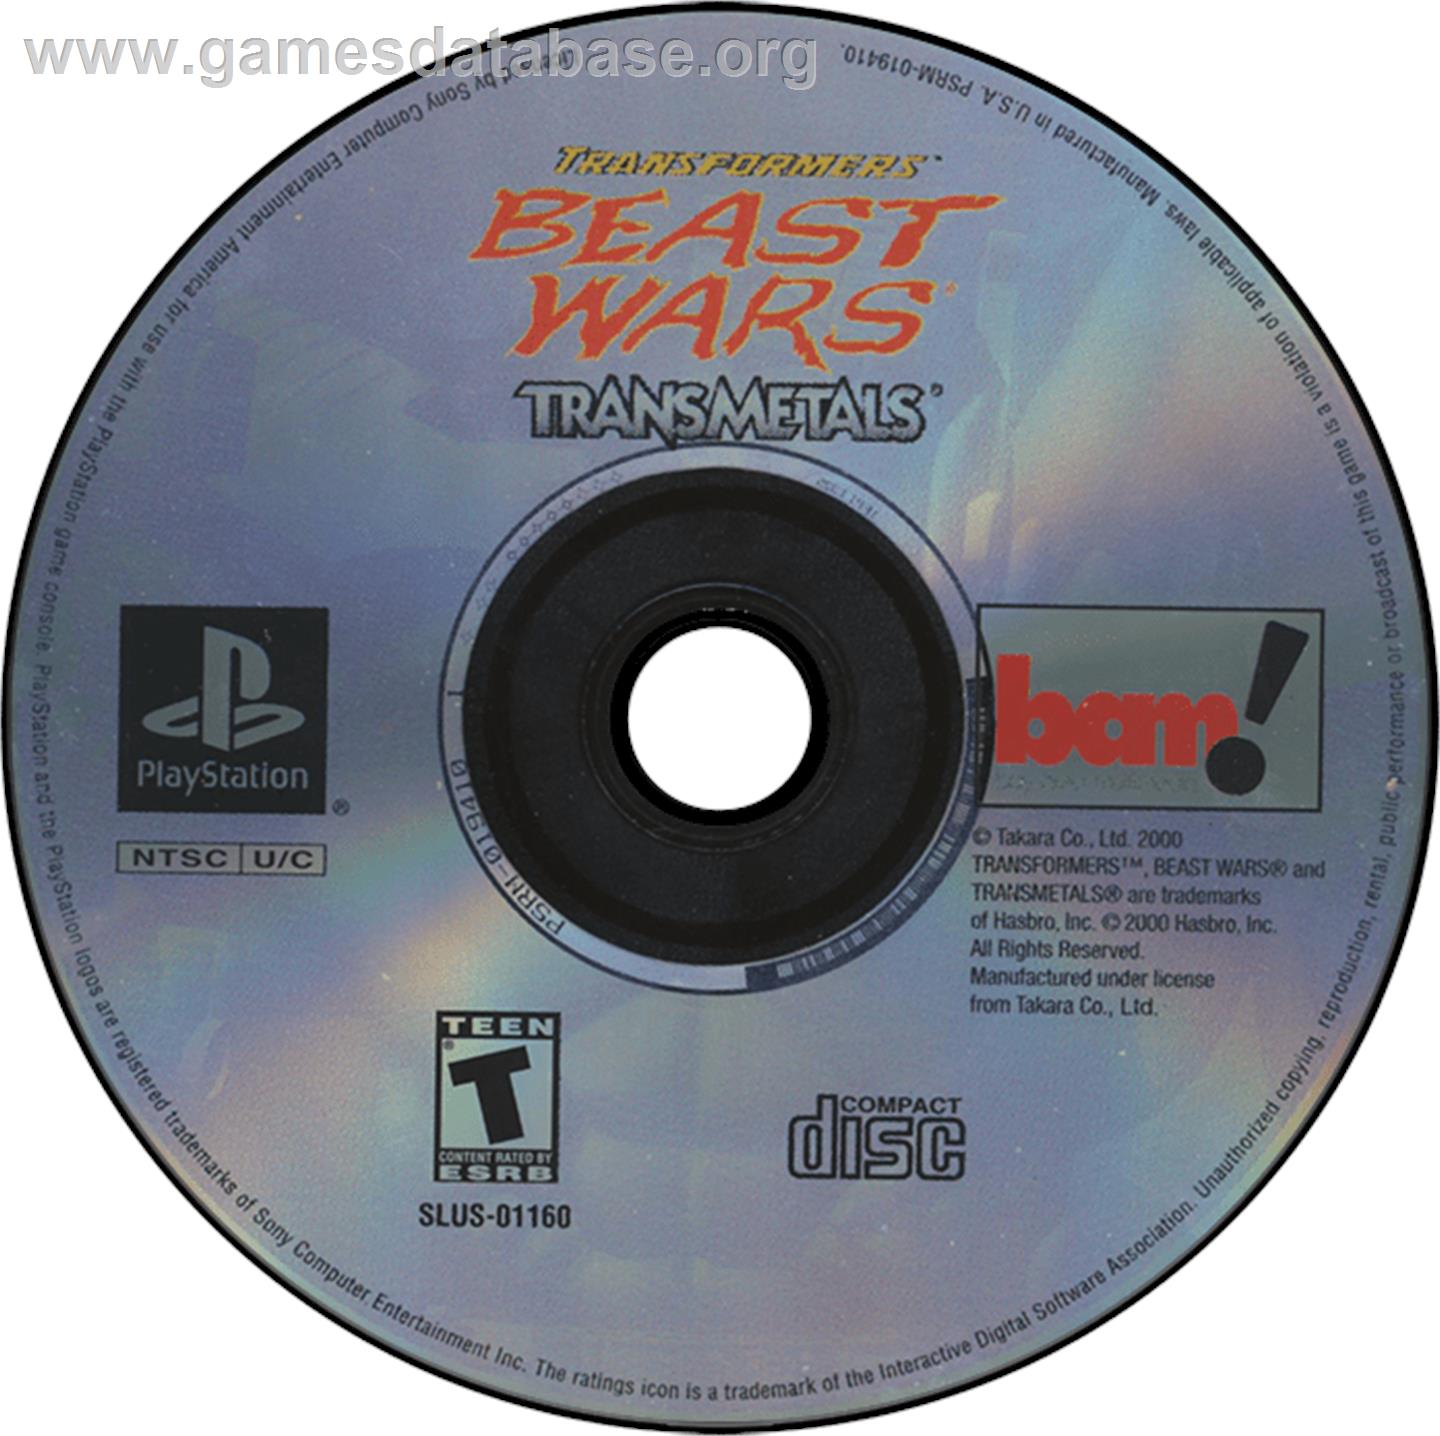 Transformers: Beast Wars Transmetals - Sony Playstation - Artwork - Disc